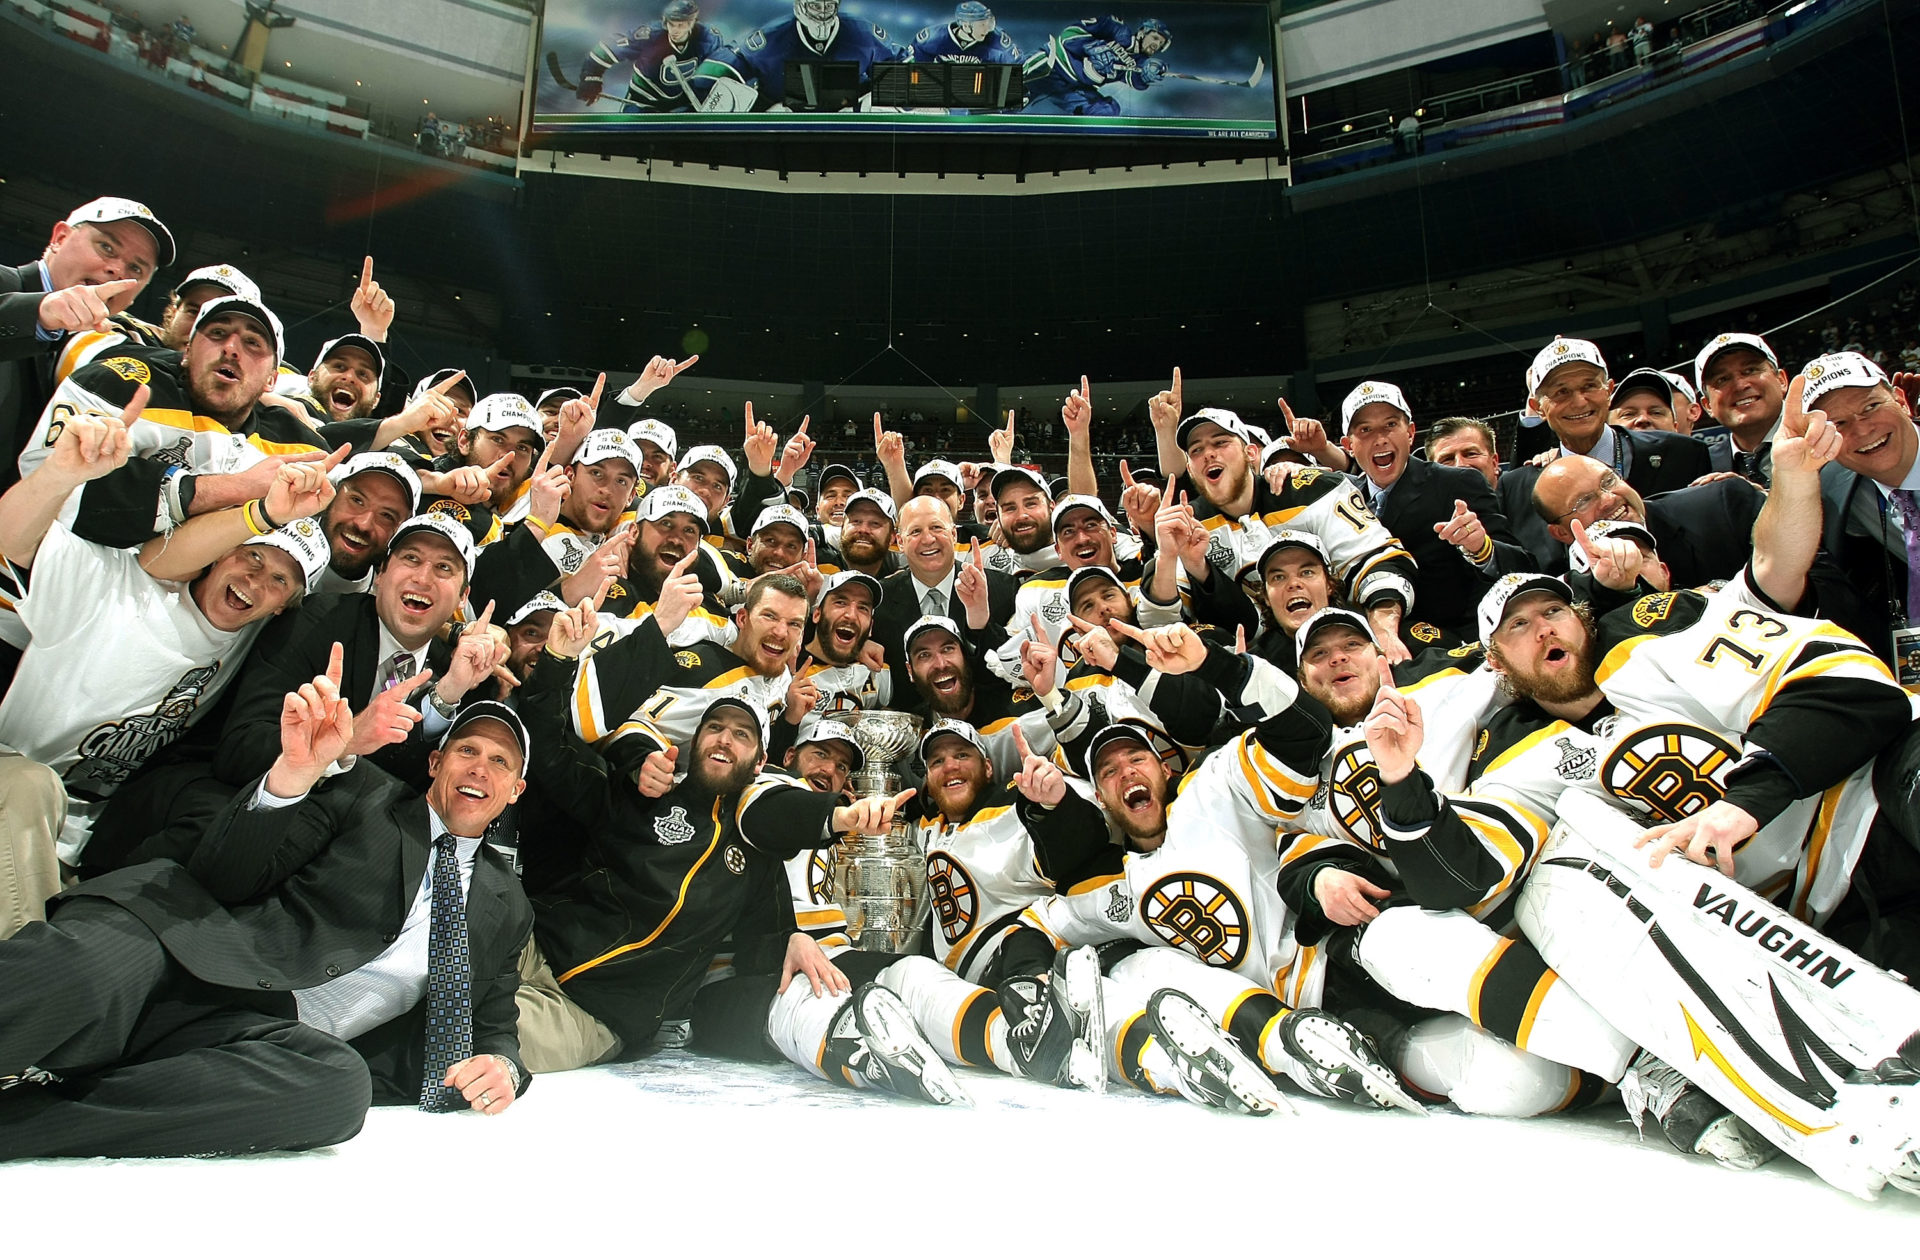 Boston Bruins v Vancouver Canucks - Game Seven